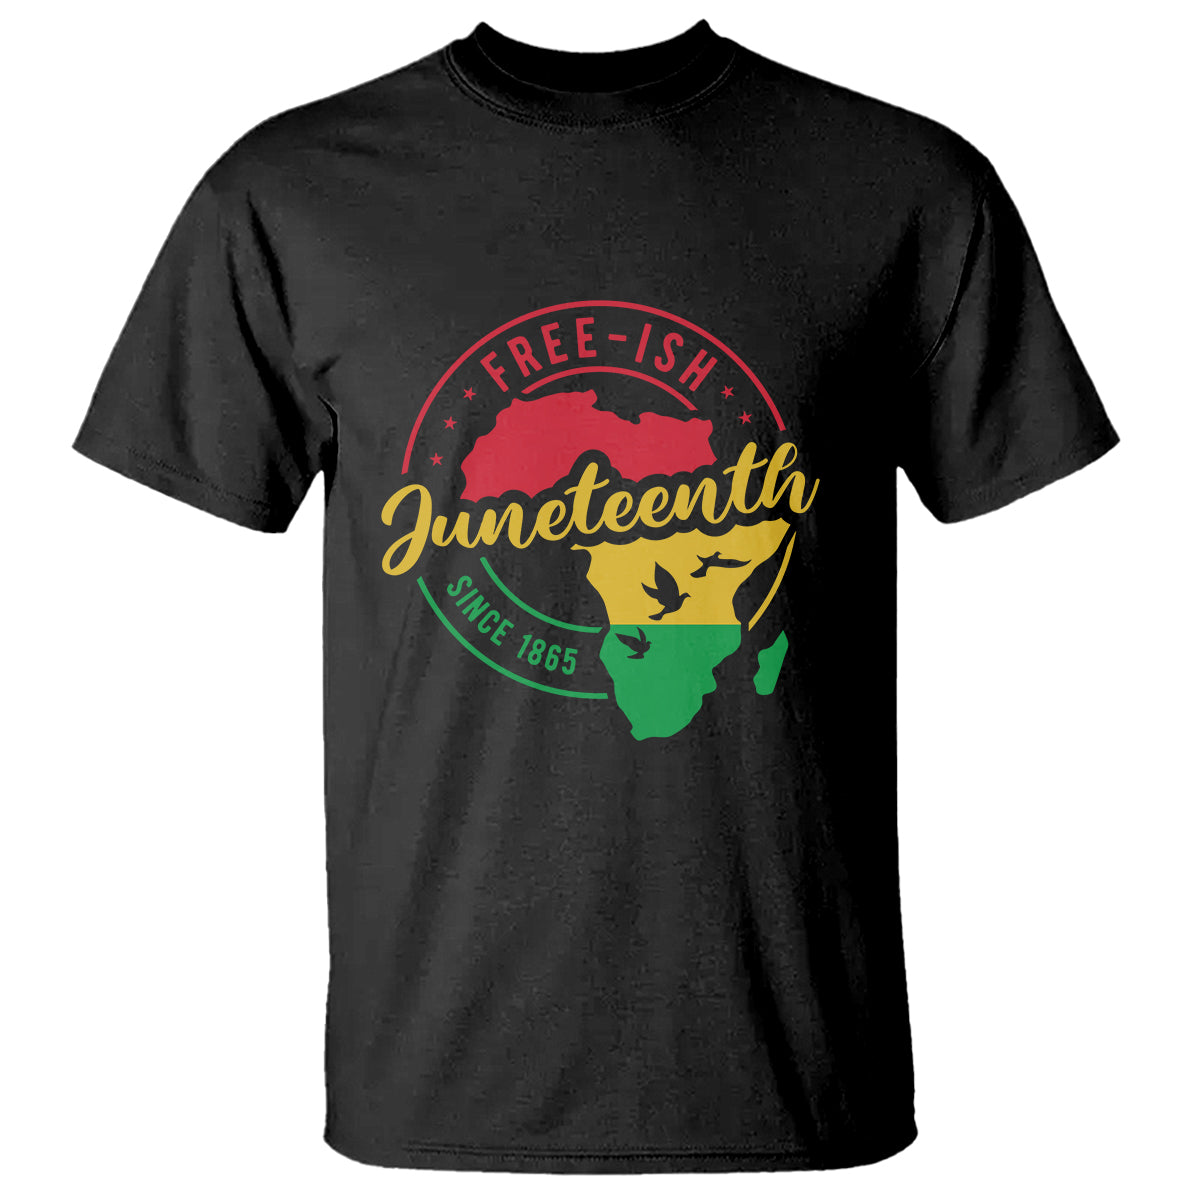 Free-ish Juneteenth Since 1865 T Shirt TS01 Black Printyourwear